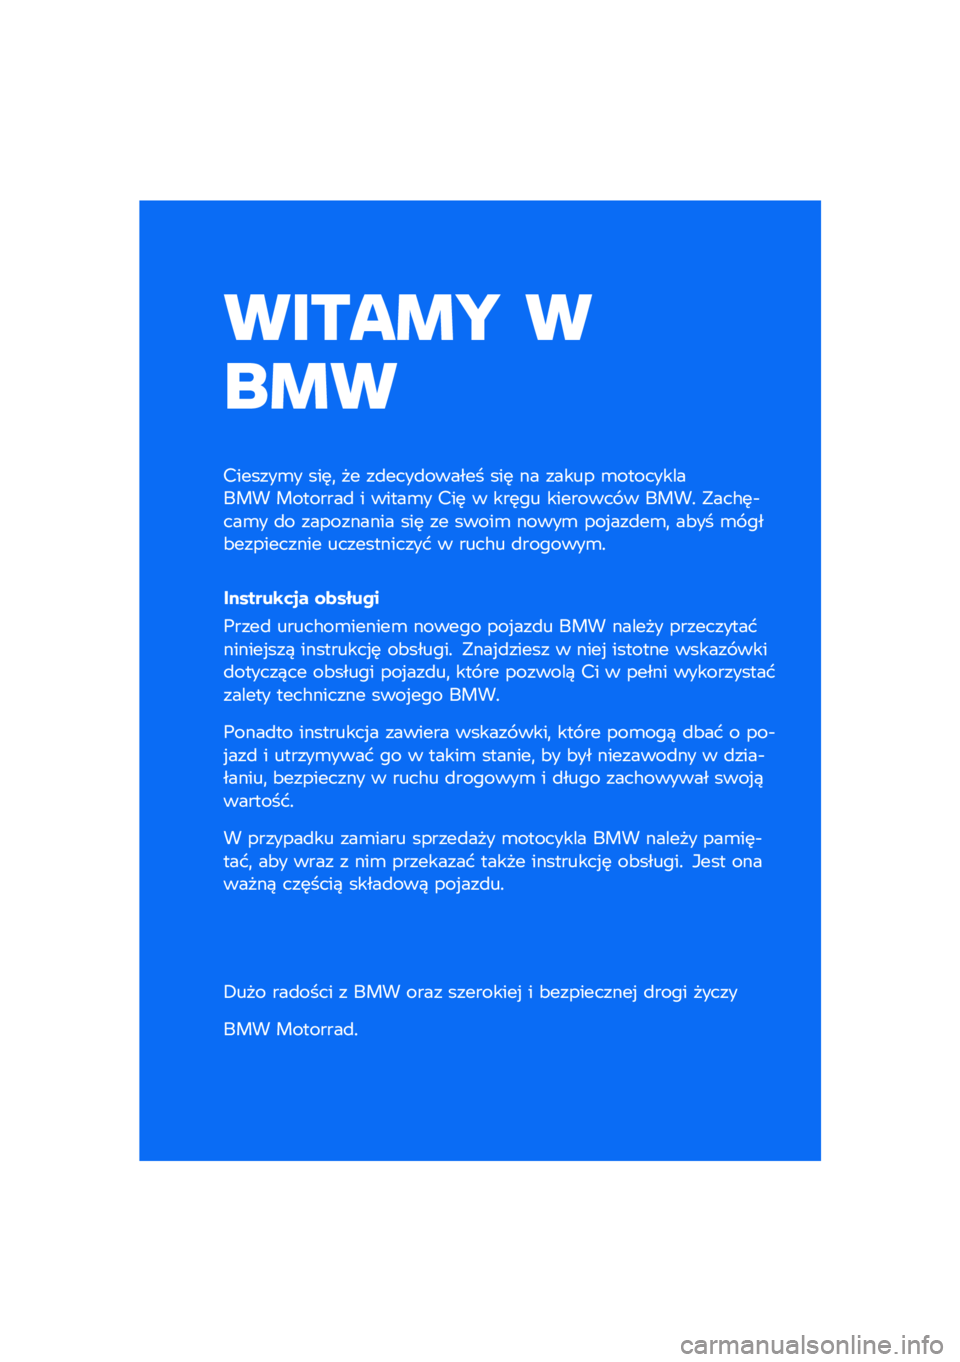 BMW MOTORRAD K 1600 B 2020  Instrukcja obsługi (in Polish) ������ �
�\b��
�������\b� ���	�
 �� ��
����
������ ���	 �� ����� �\b����������� ��������
 � �����\b� ���	 � ���	�� ��������